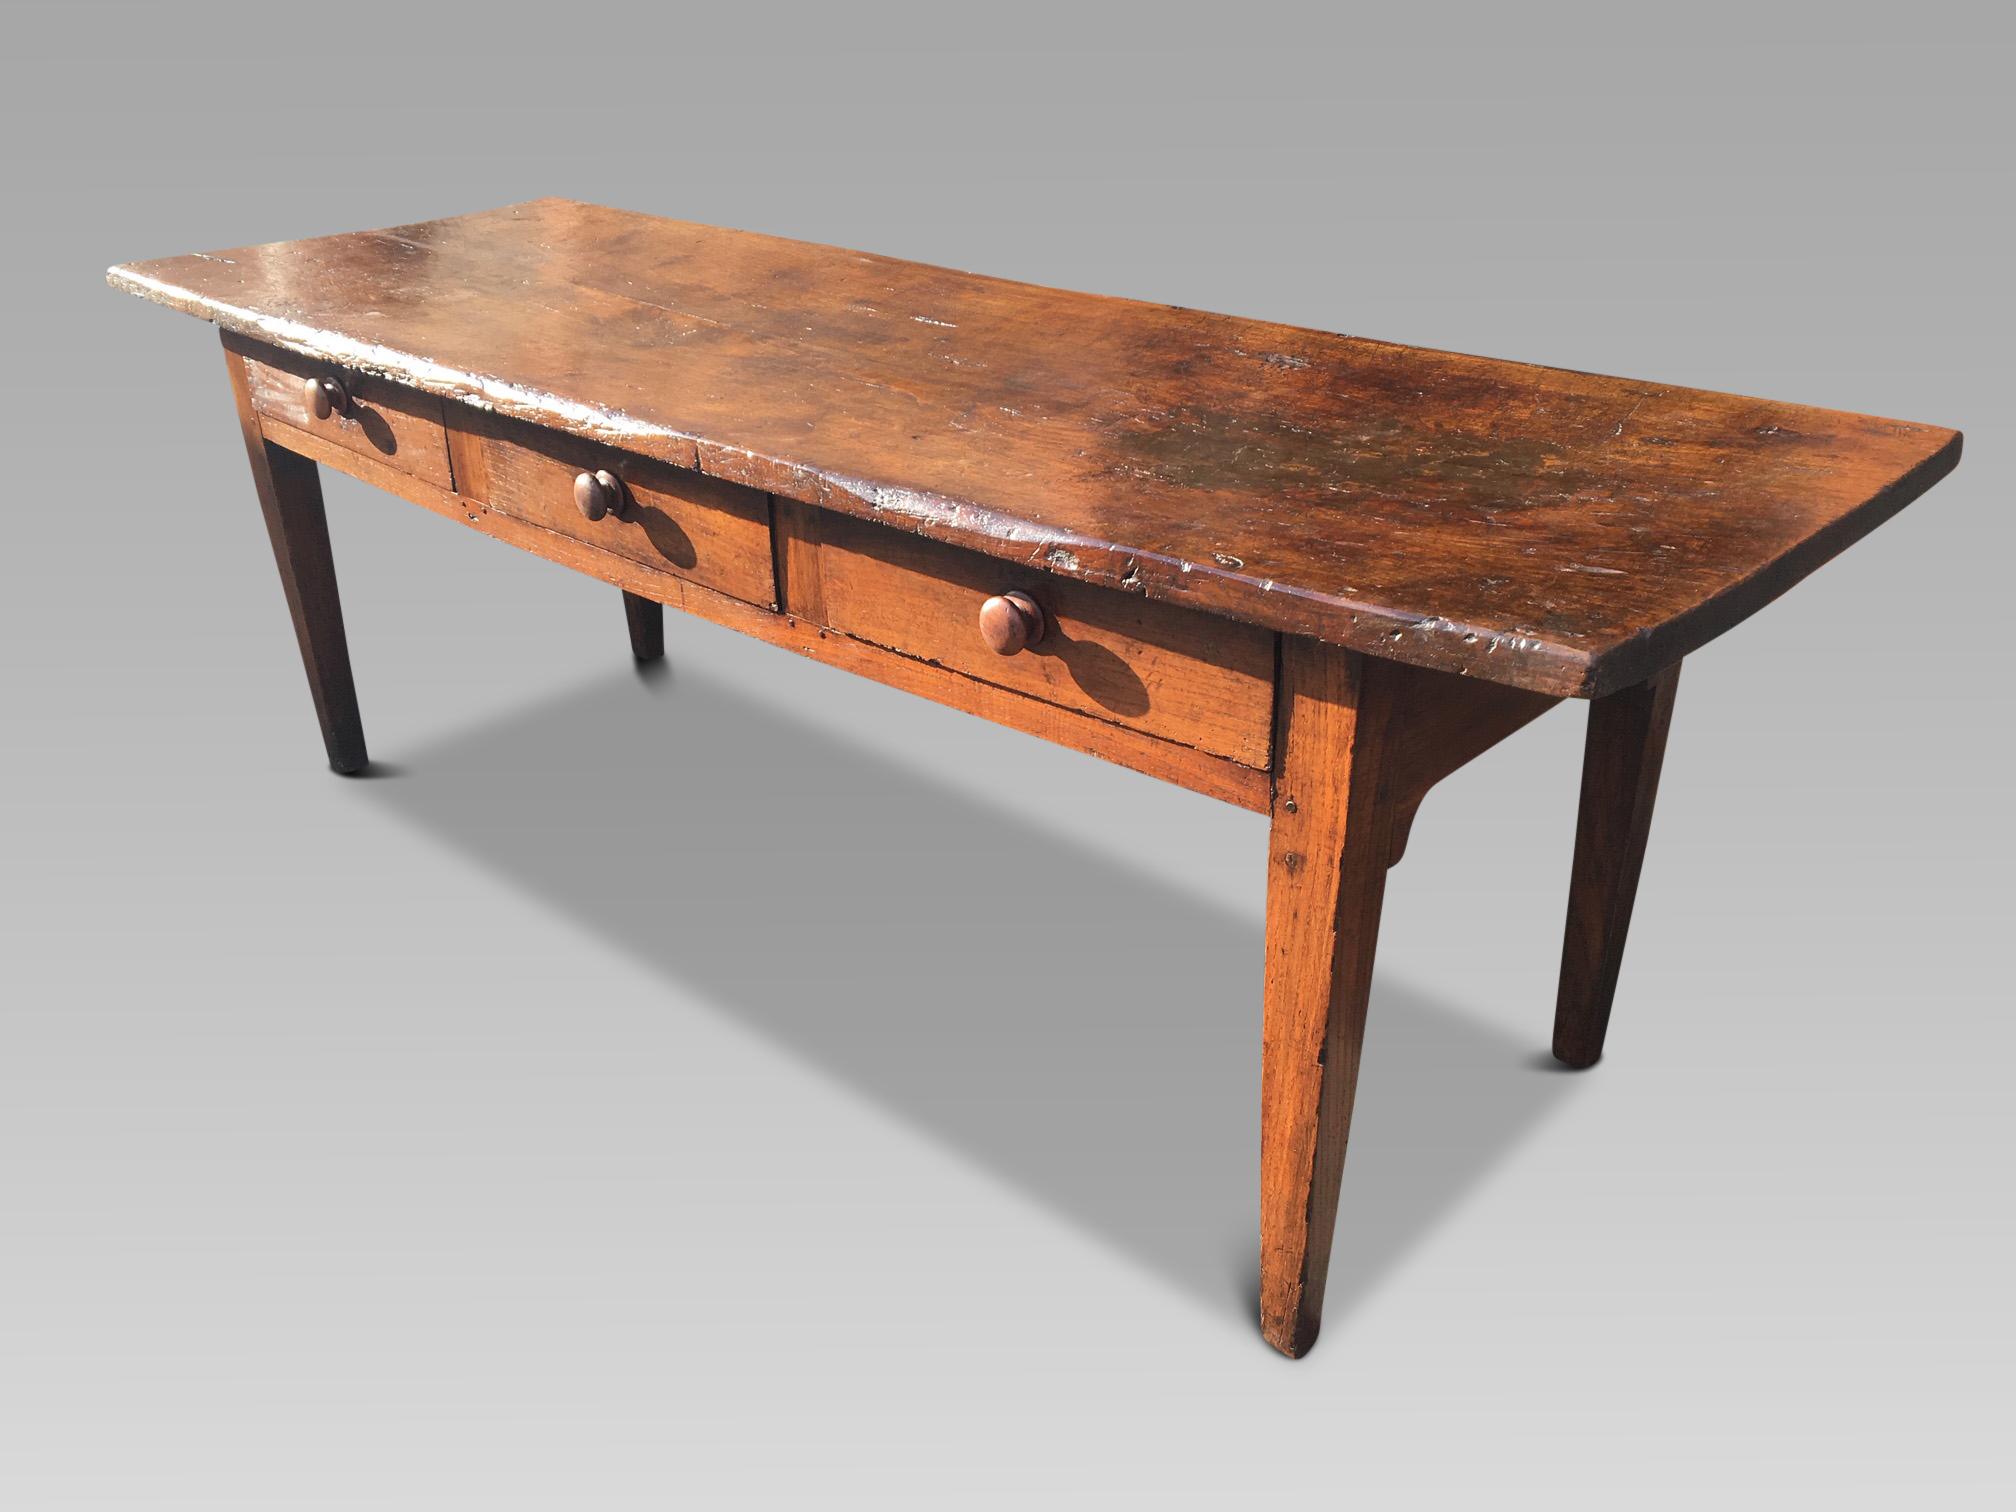  Dresser Base in Chestnut.  / Serving Table circa 1790 (Land)